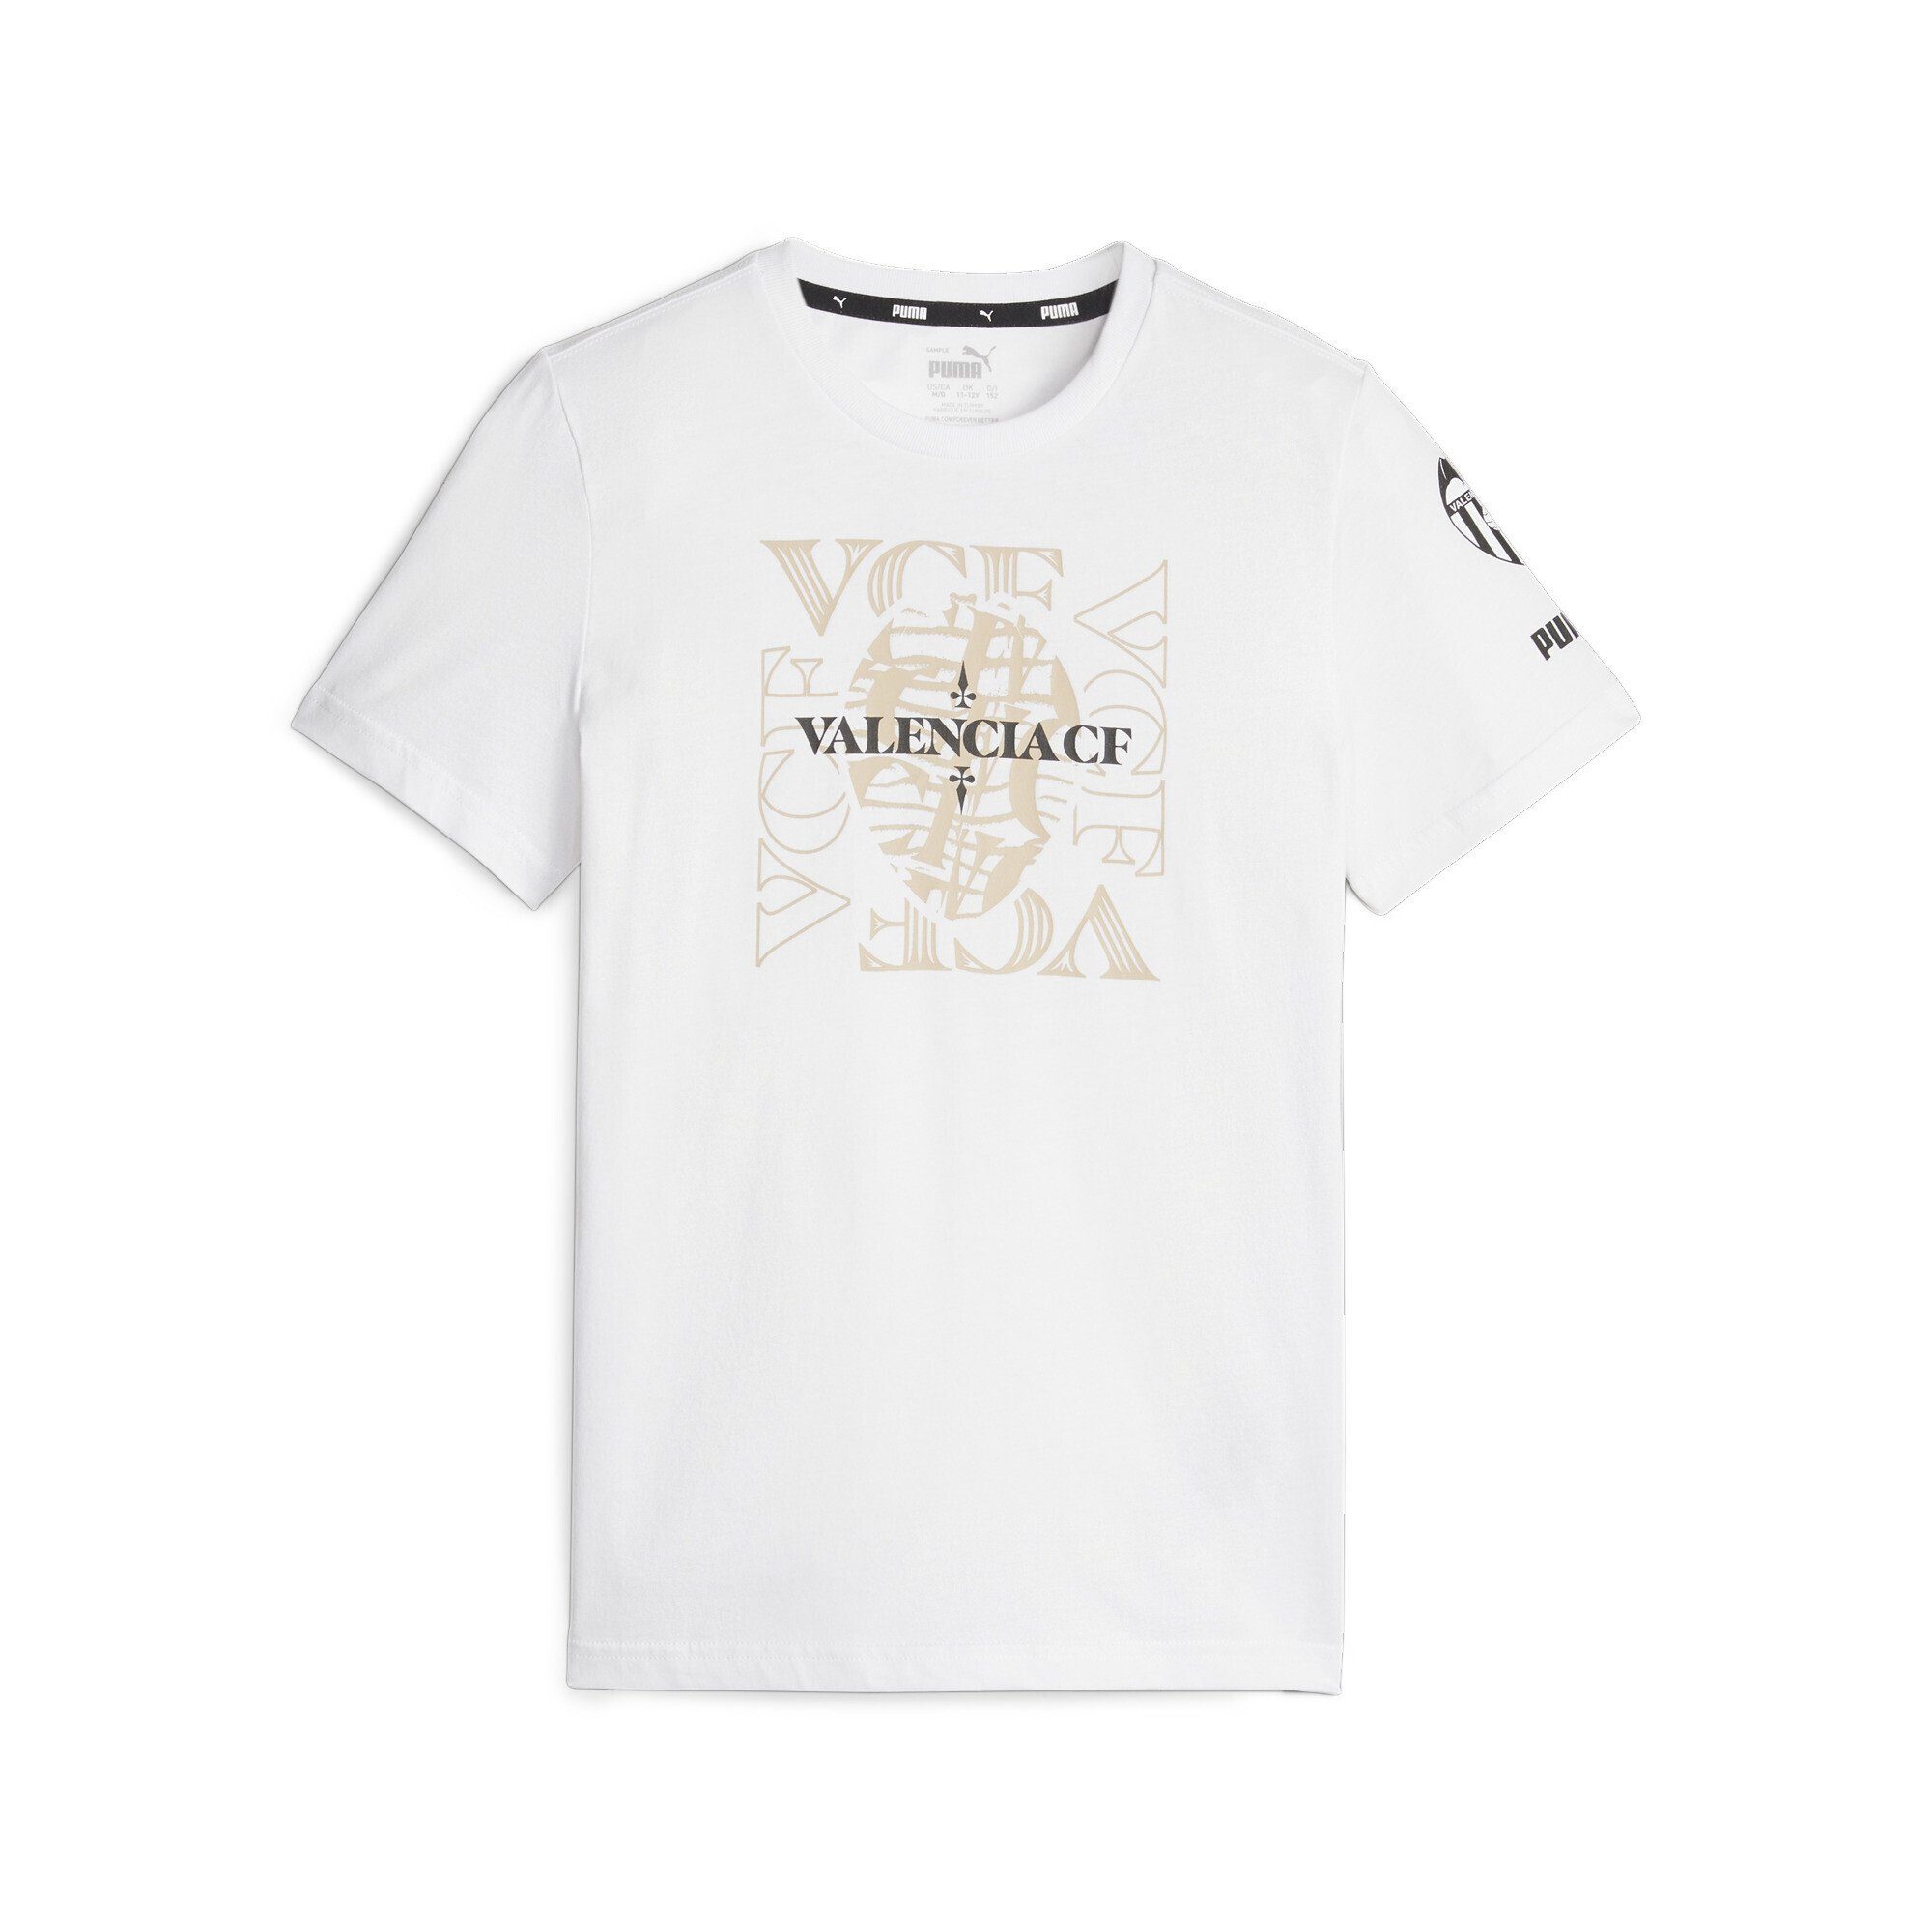 [Limitierte Anzahl] PUMA T-Shirt Valencia T-Shirt CF FtblCore Jugendliche